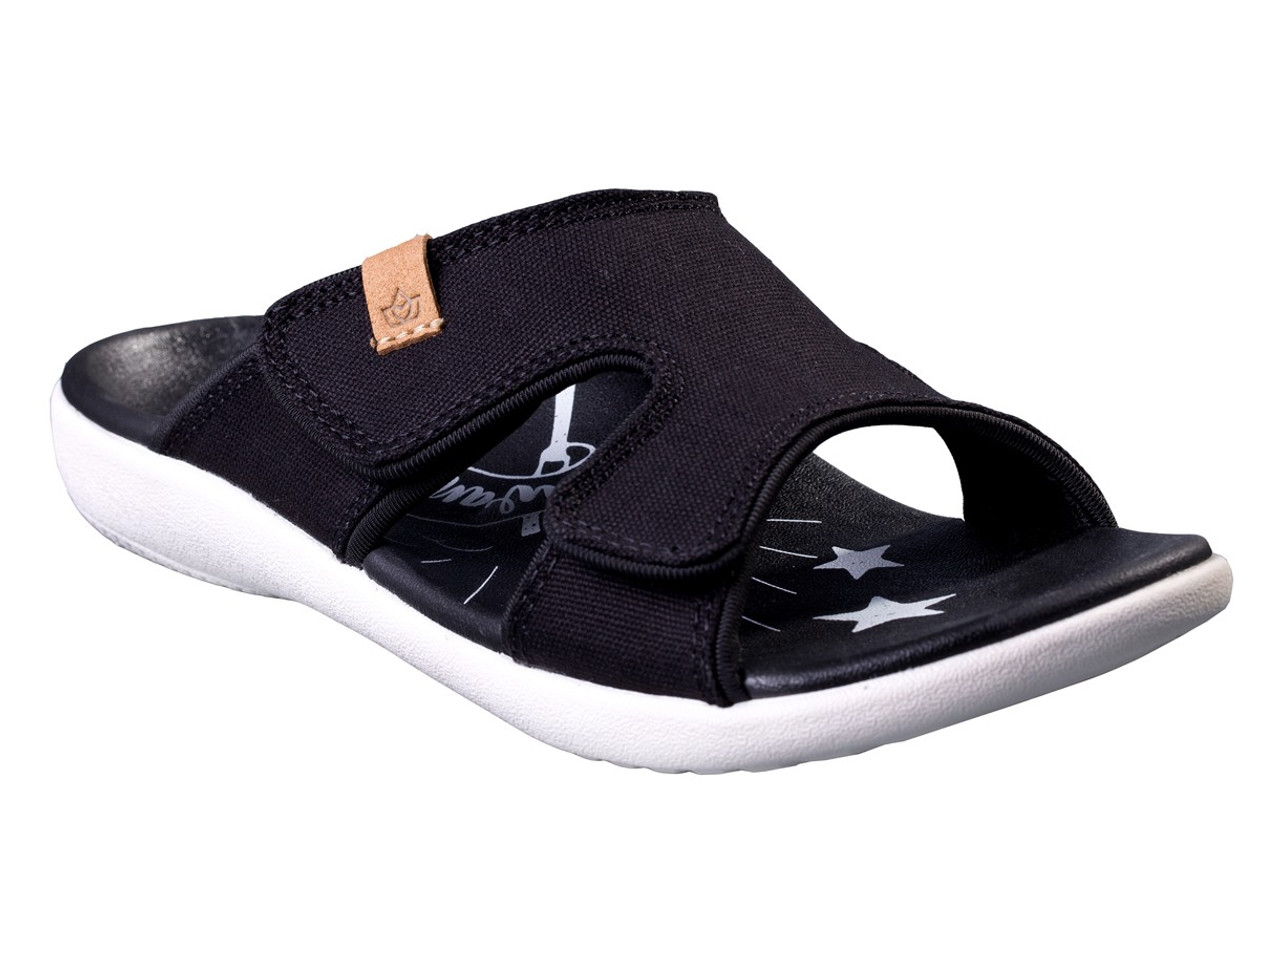 Spenco Kholo Believe Orthotic Slide Sandal - Free Shipping